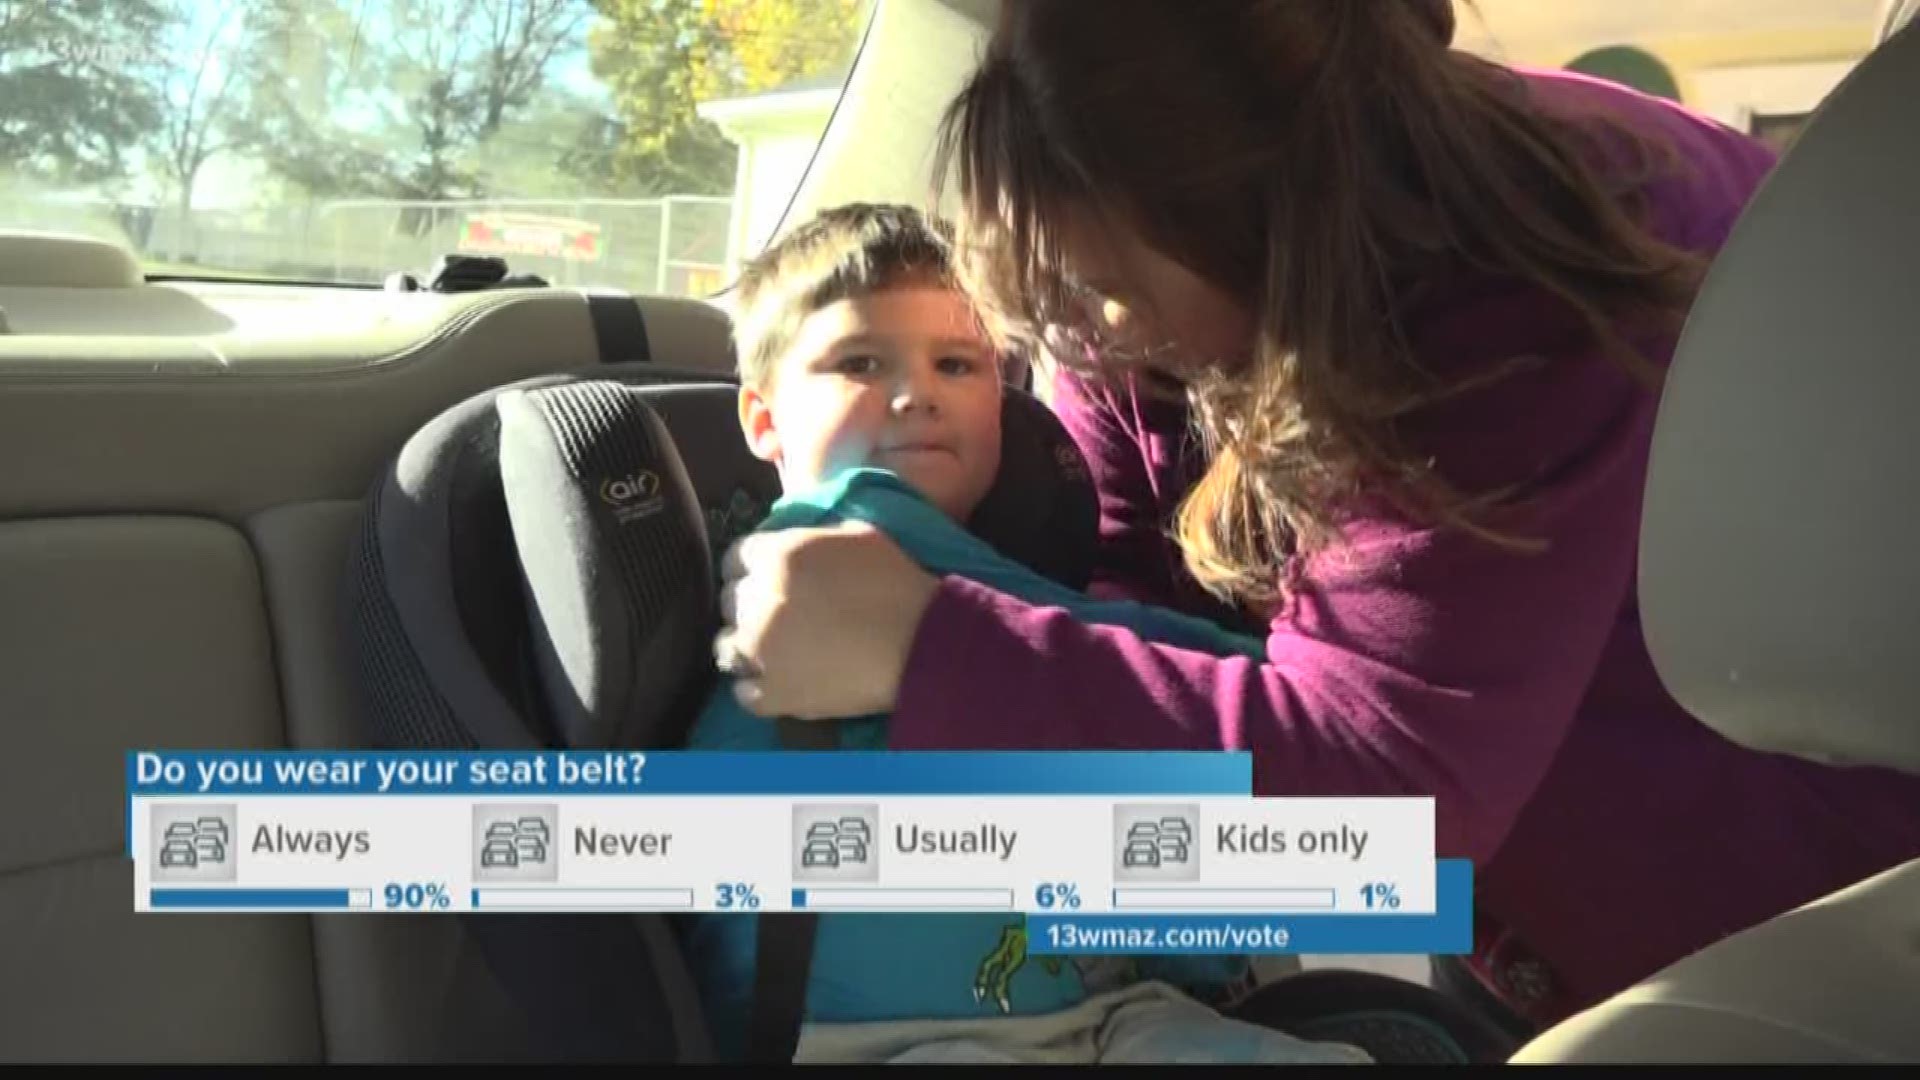 Proper seat belt usage important for safety of children